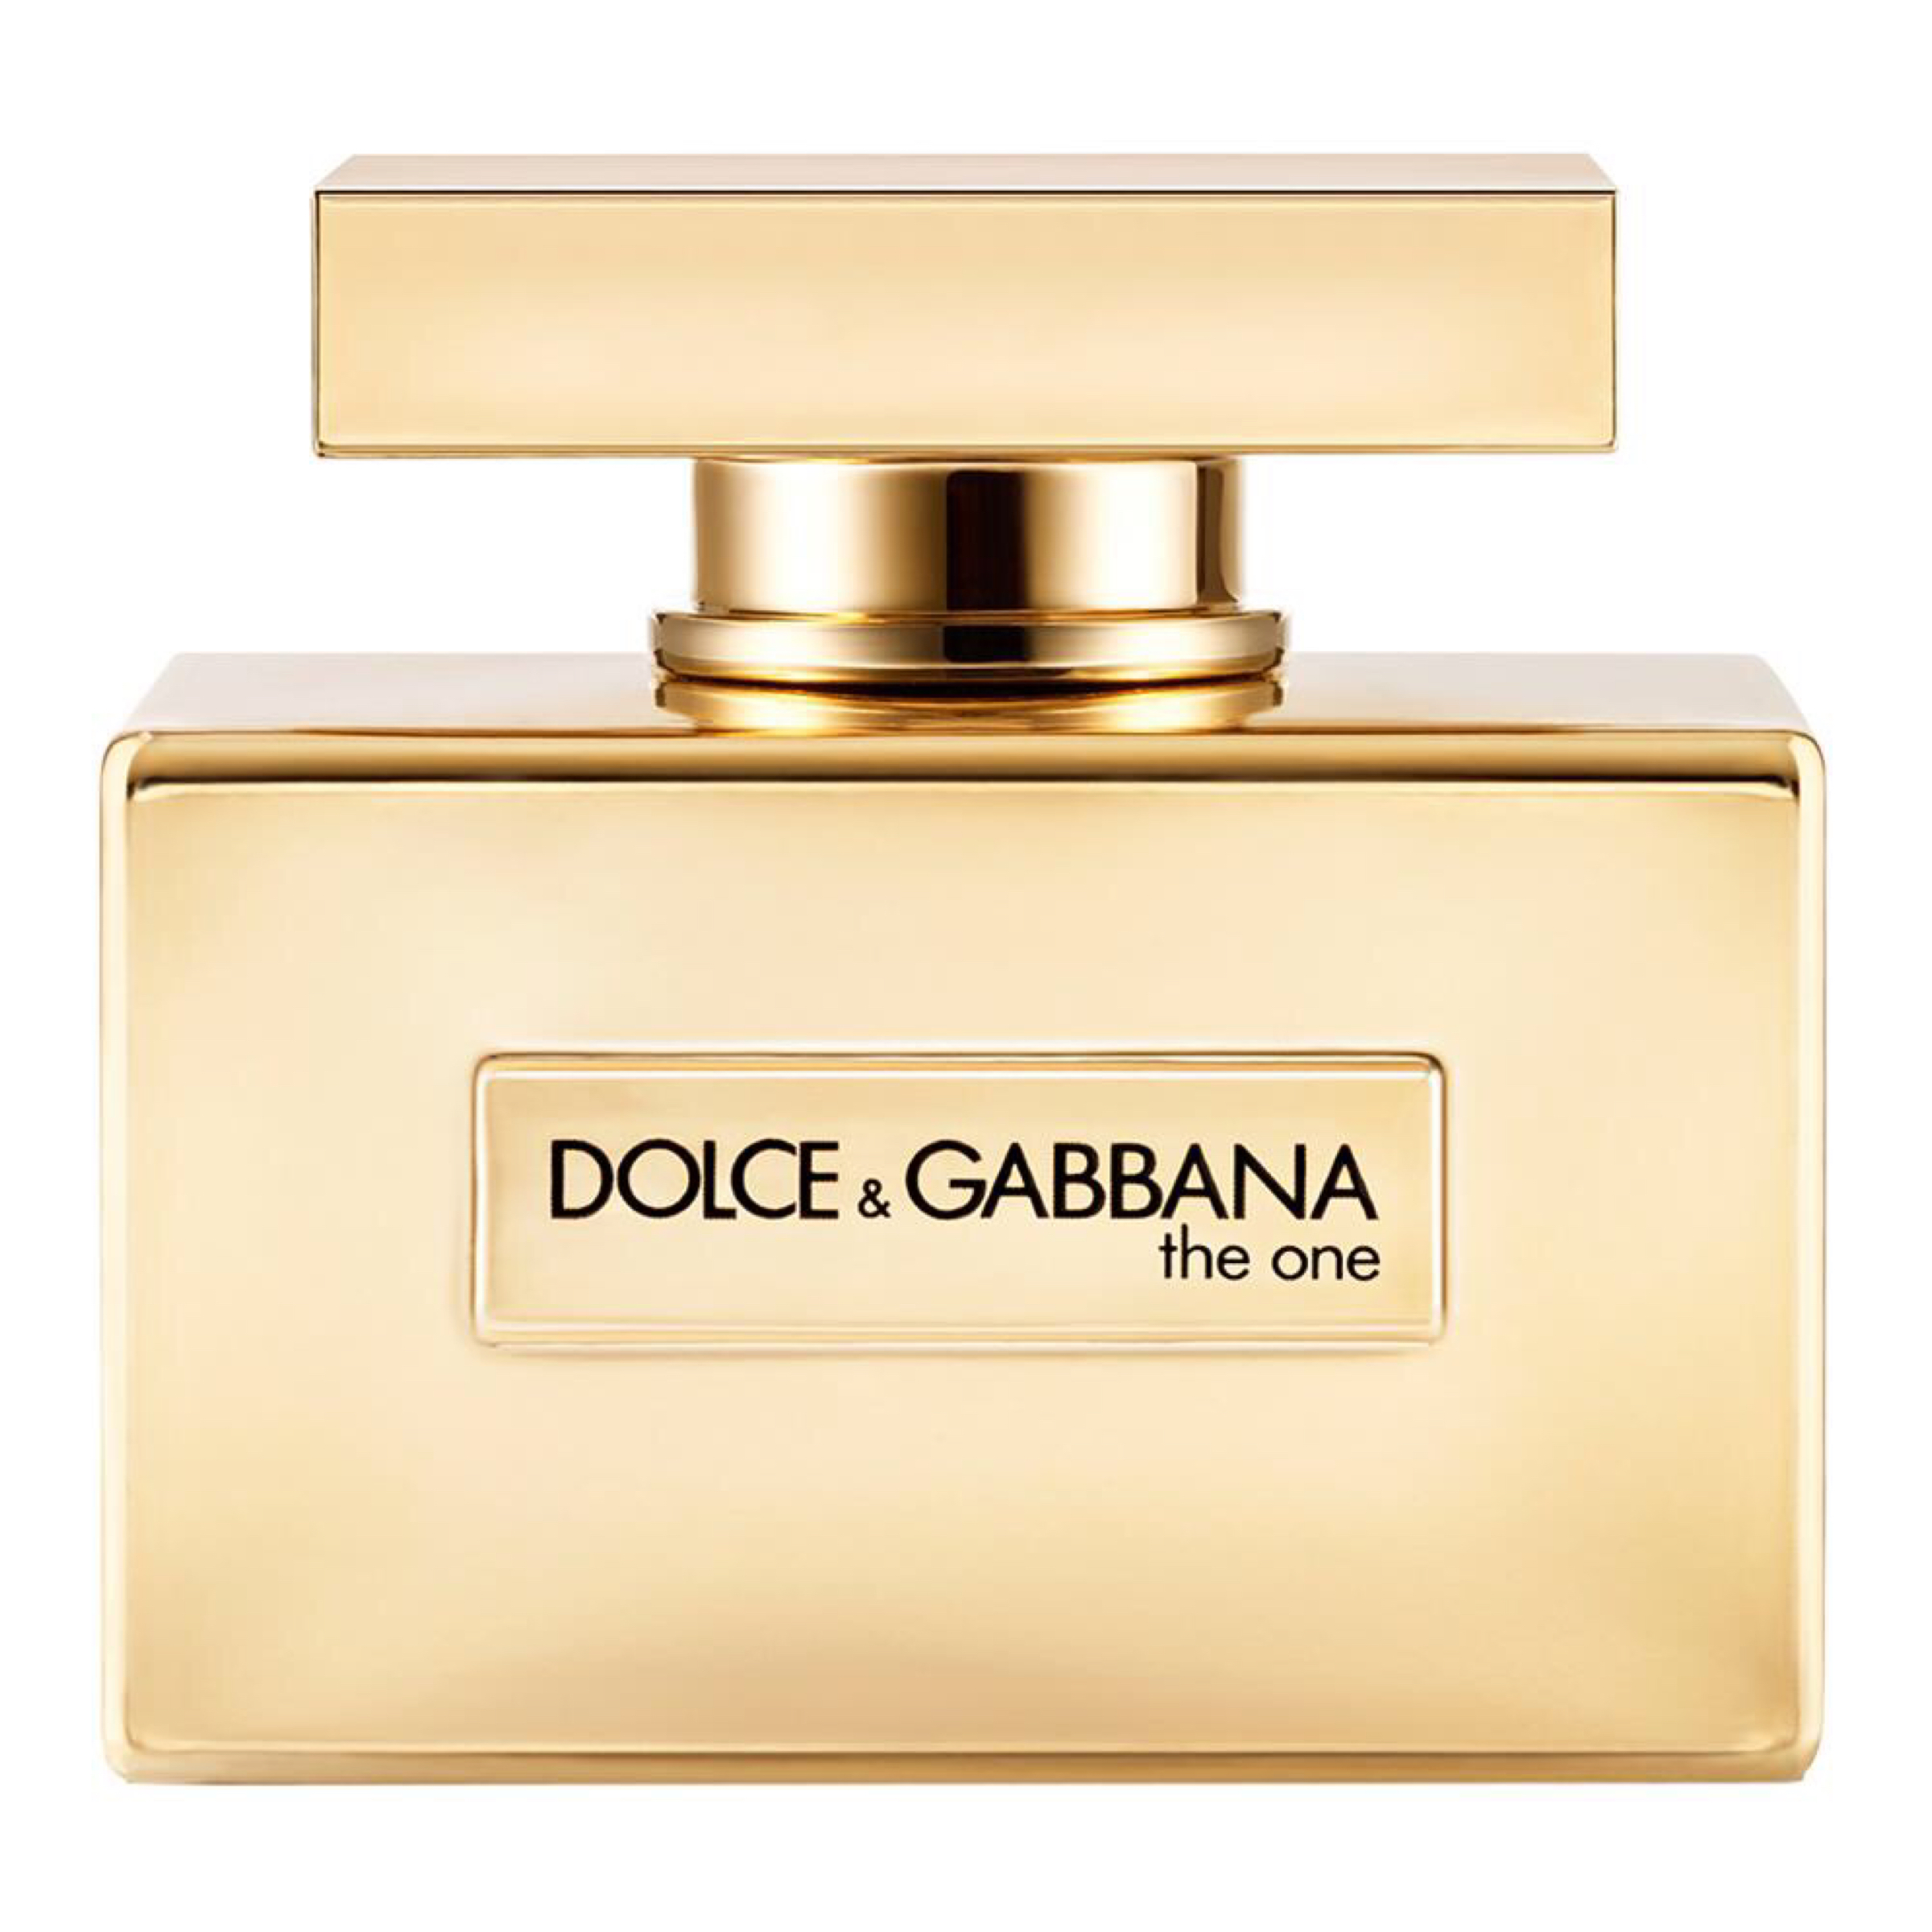 Дольче габбана the one купить. Dolce Gabbana the one Gold intense. Dolce Gabbana the one Gold Limited Edition. Dolce Gabbana the one Gold intense женские. Дольче Габбана the one Gold intense.